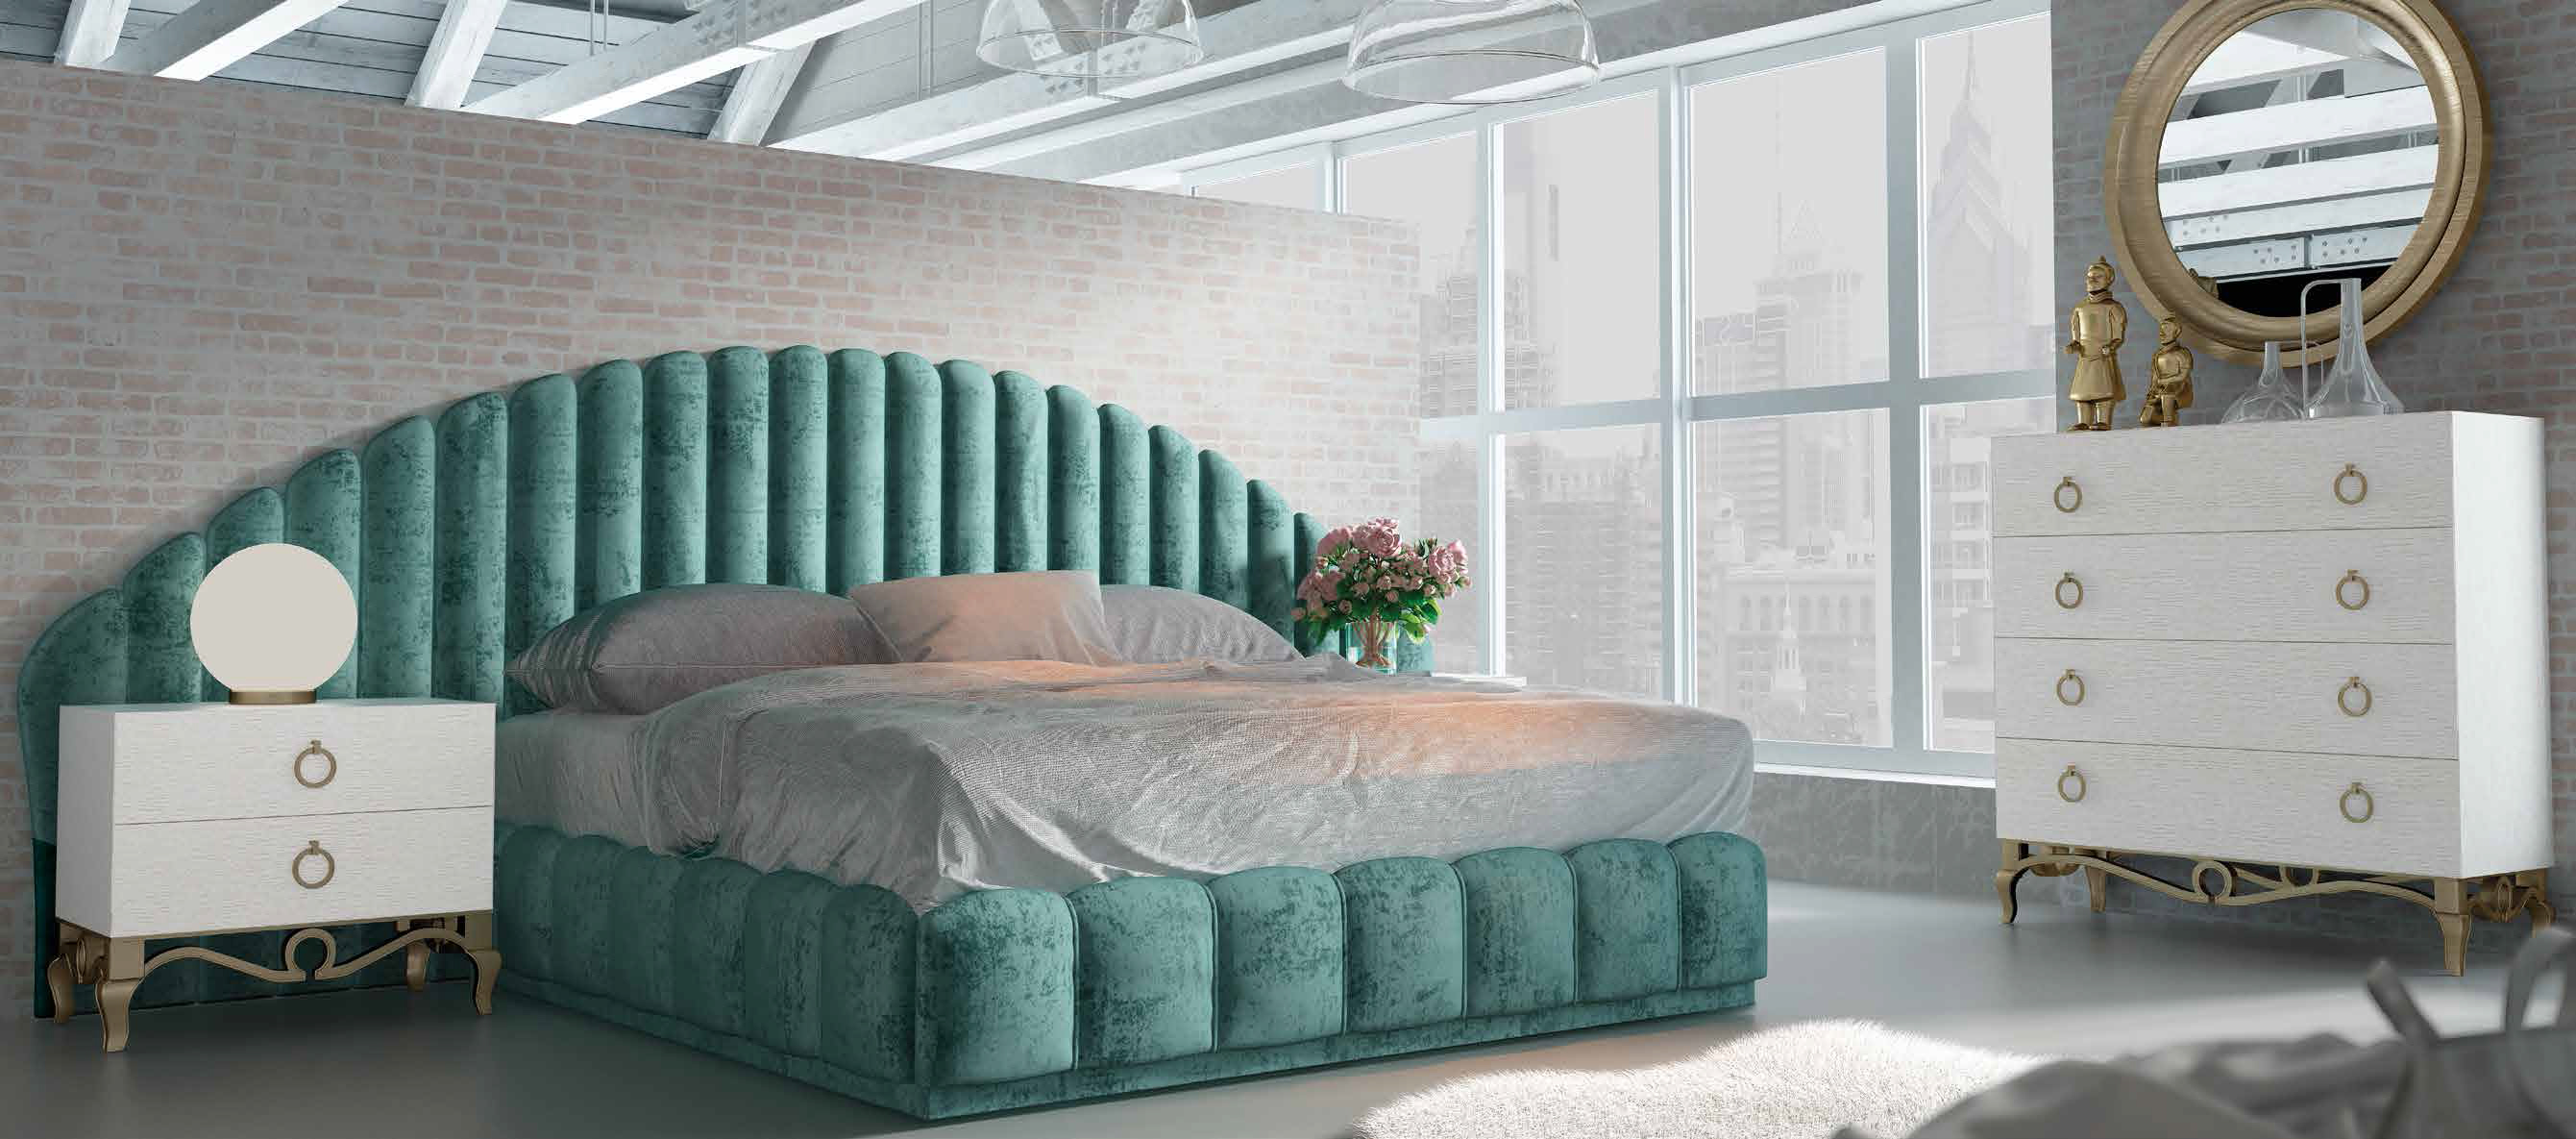 Brands Franco Furniture Bedrooms vol3, Spain DOR 65